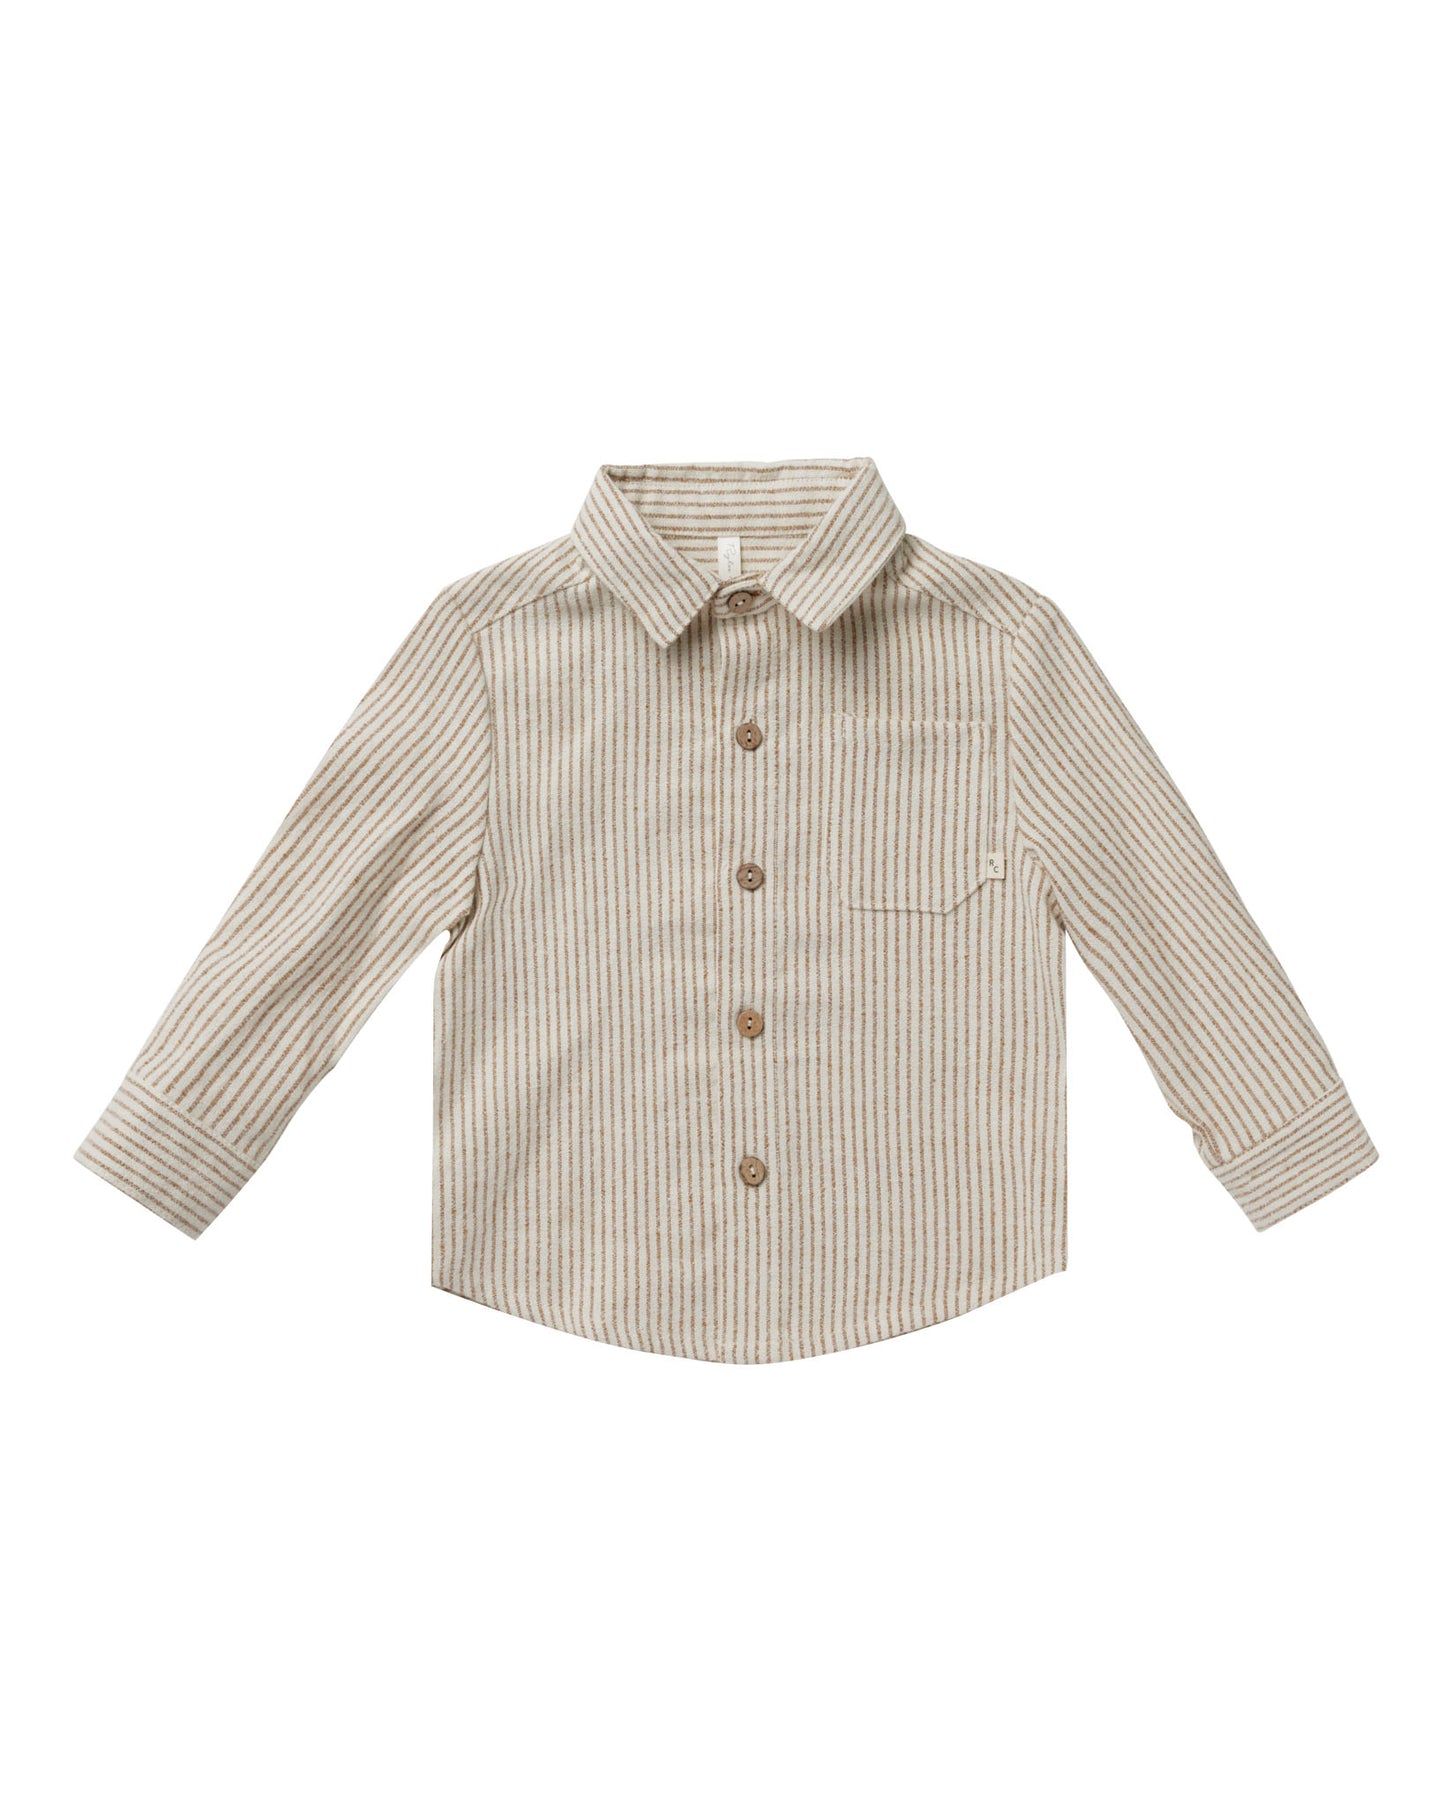 Rylee + Cru - Collared Long Sleeve Shirt - Brass Stripe